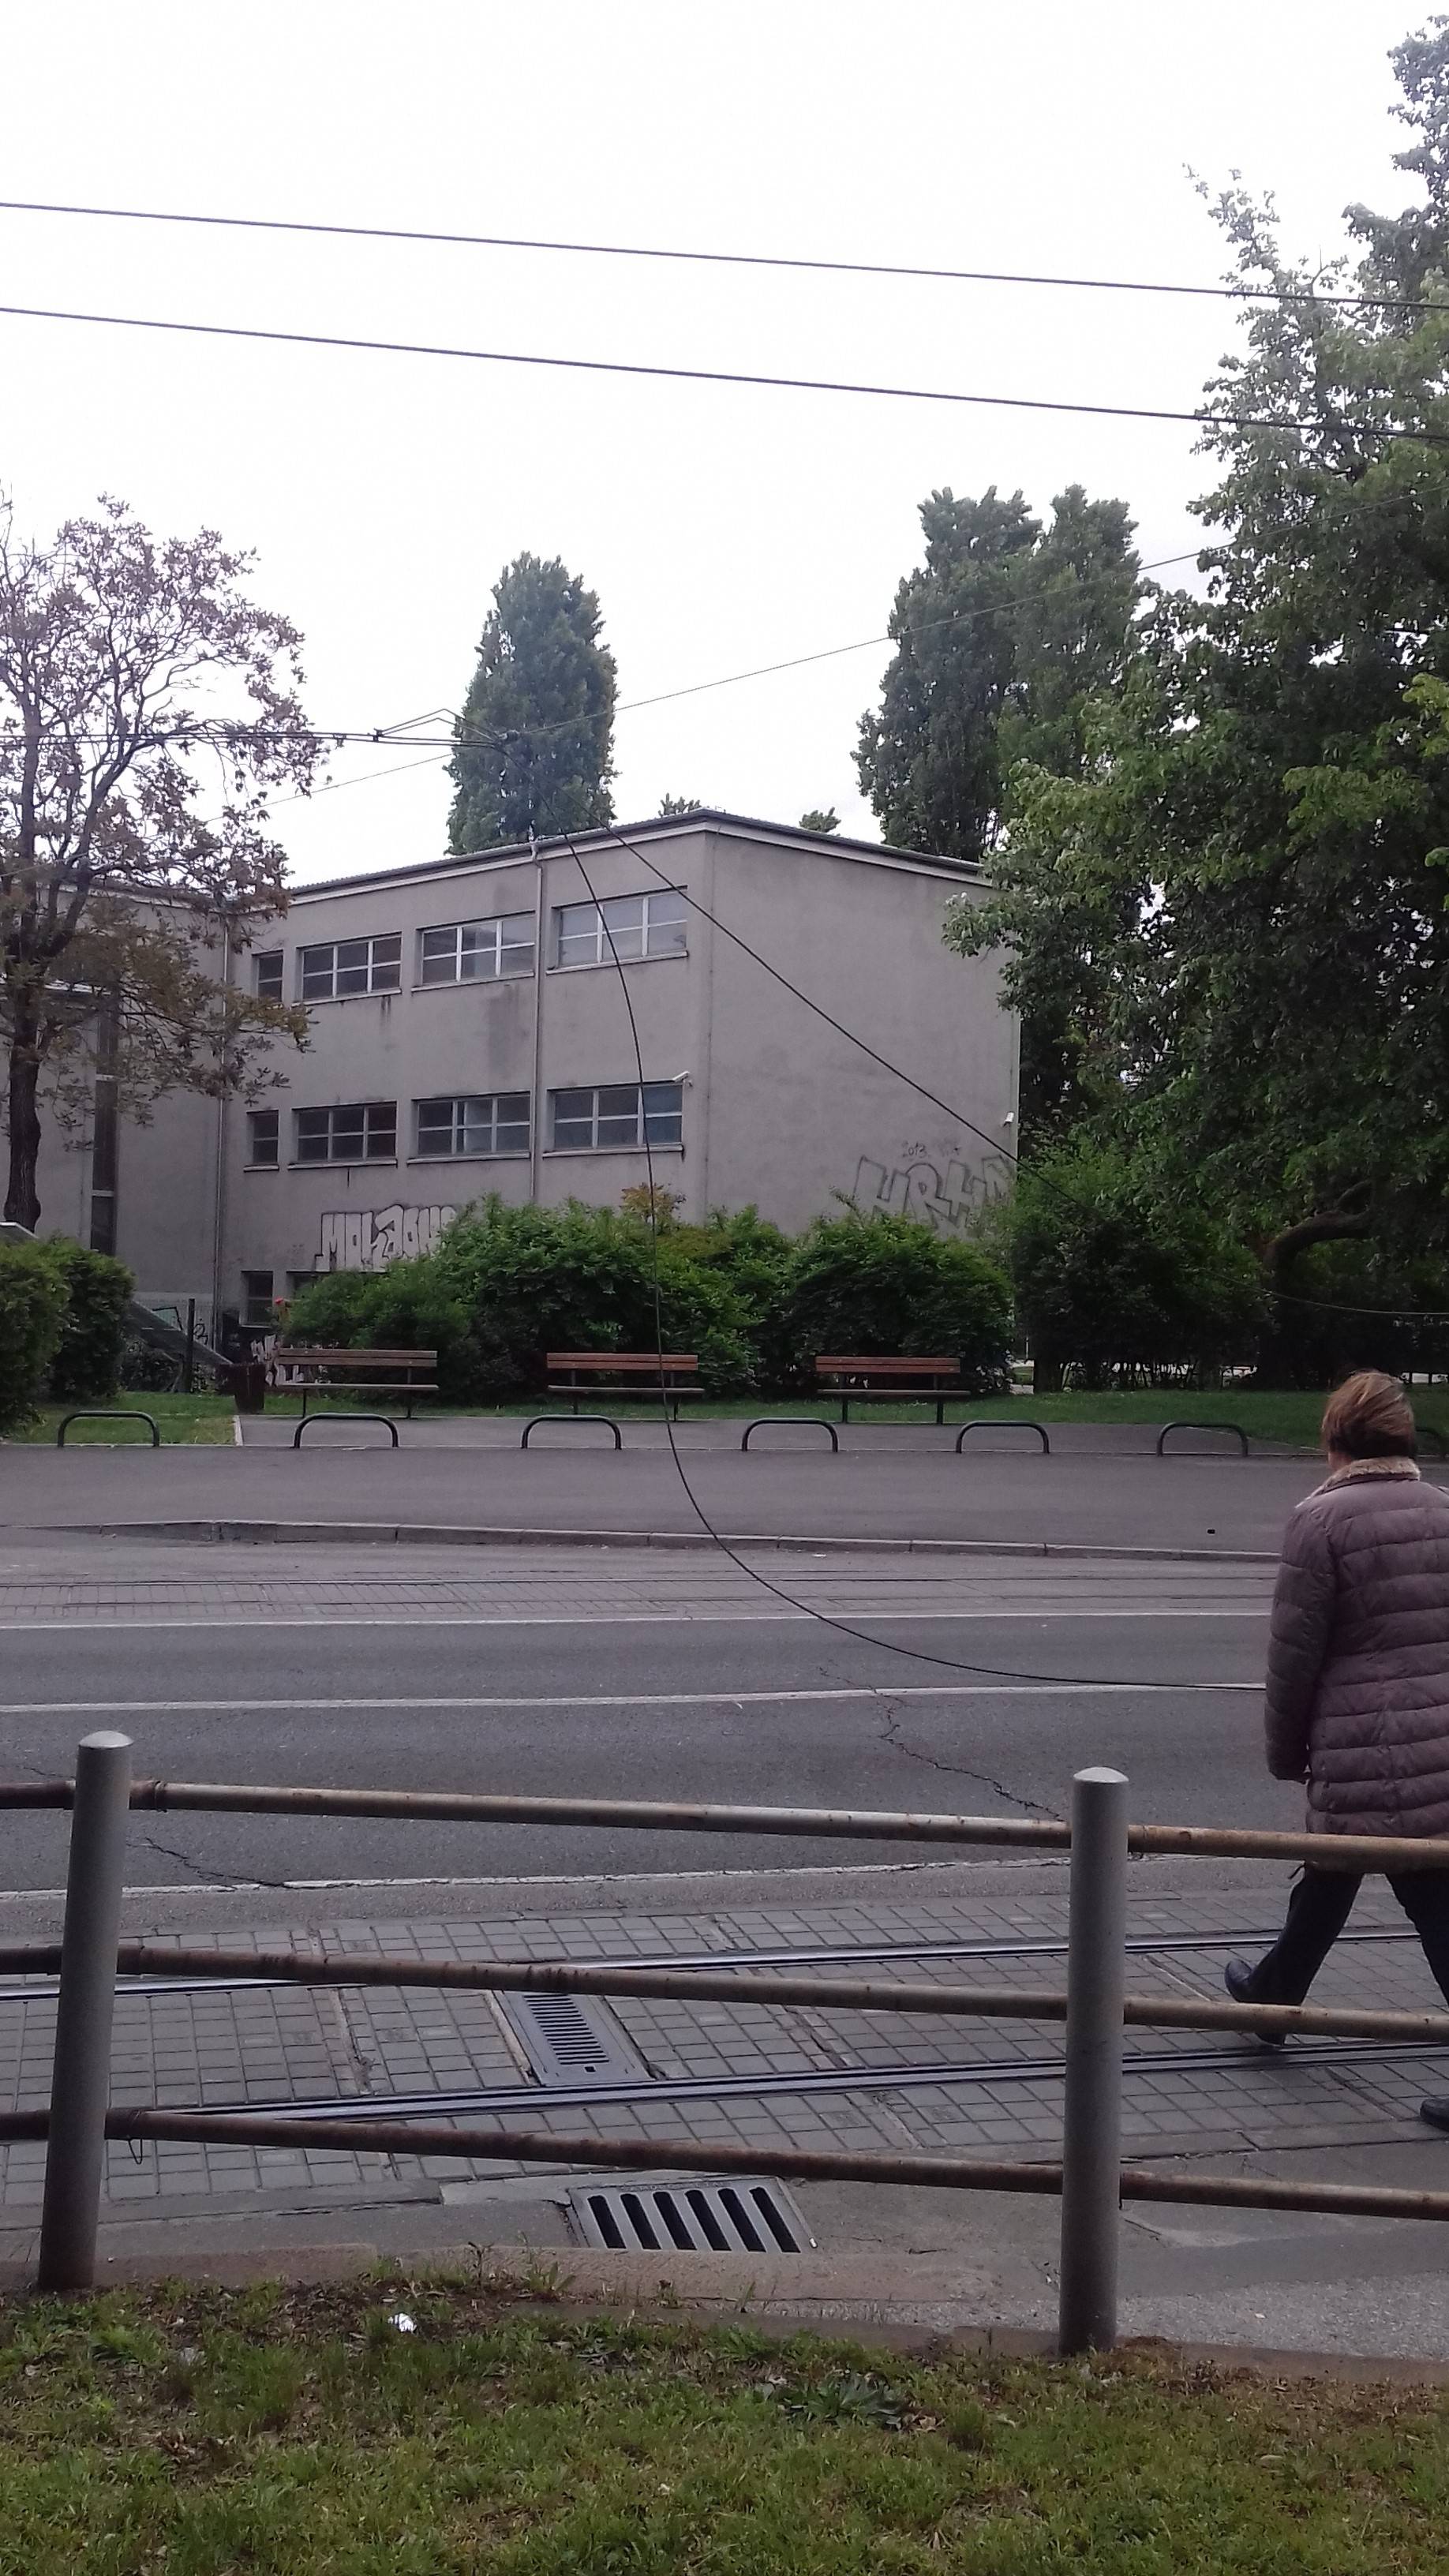 Pravi kaos u Zagrebu: Potrgao je tramvajske žice, sve je stalo